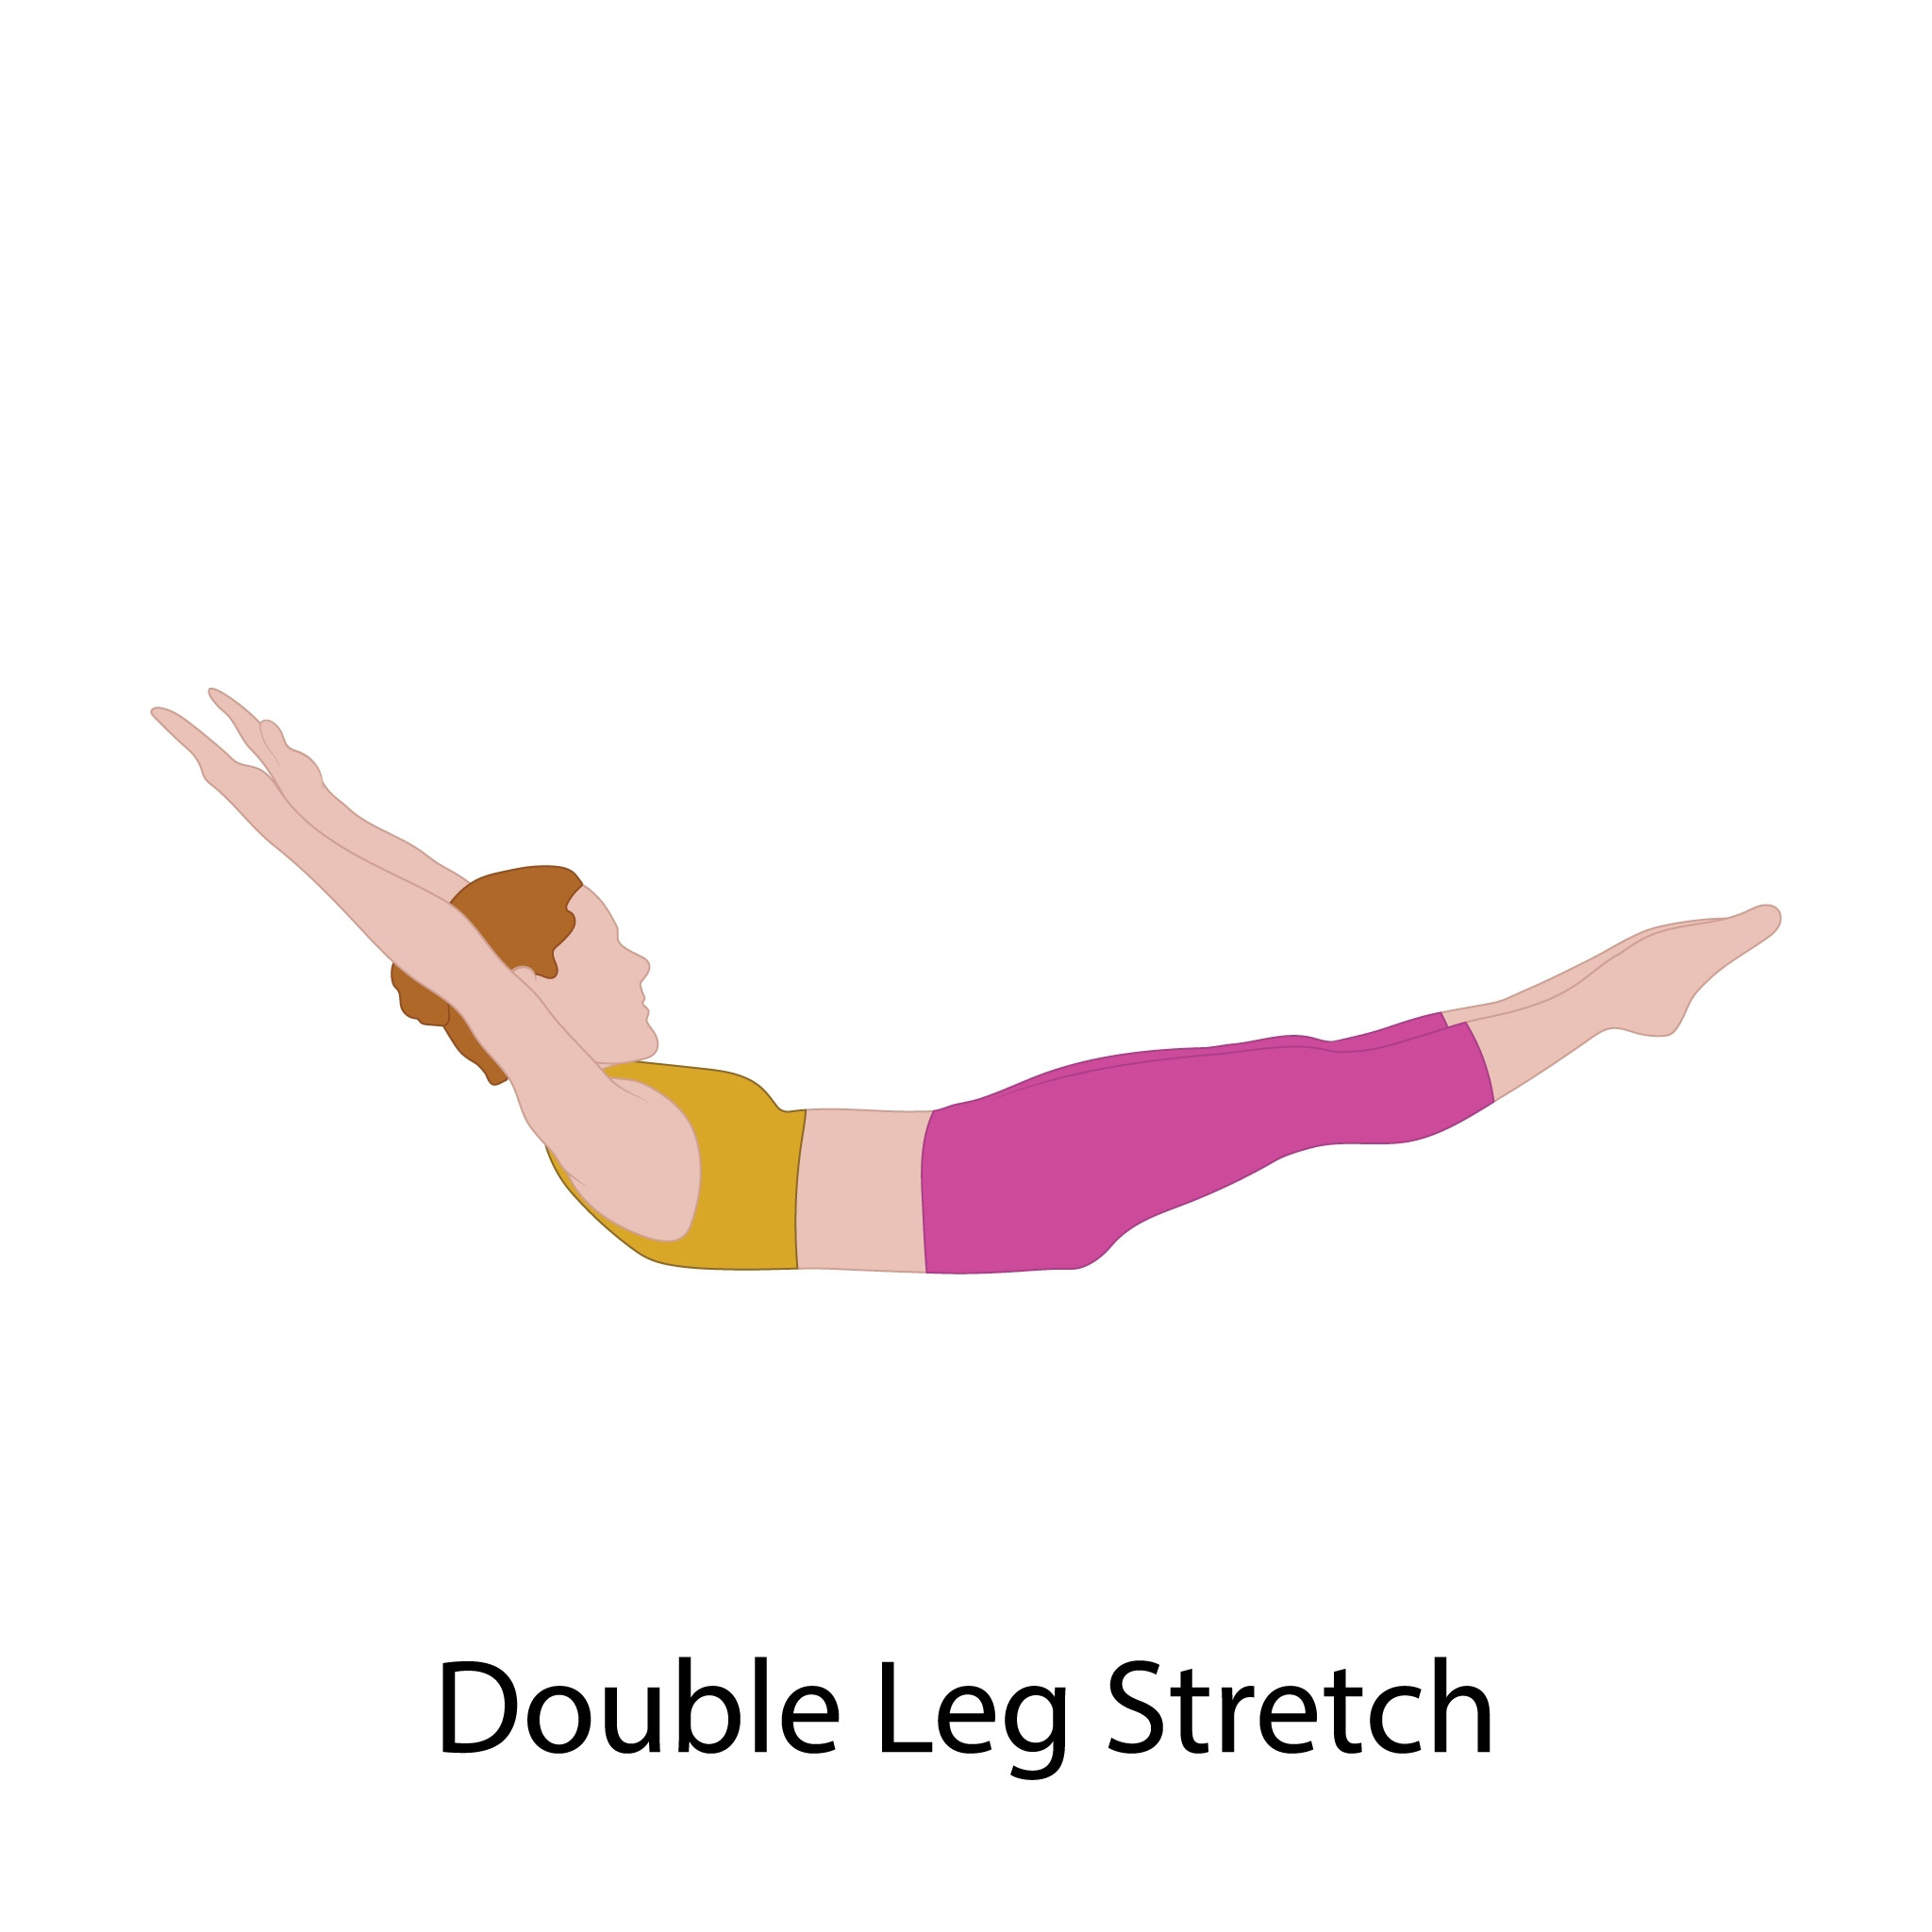 Double leg stretch